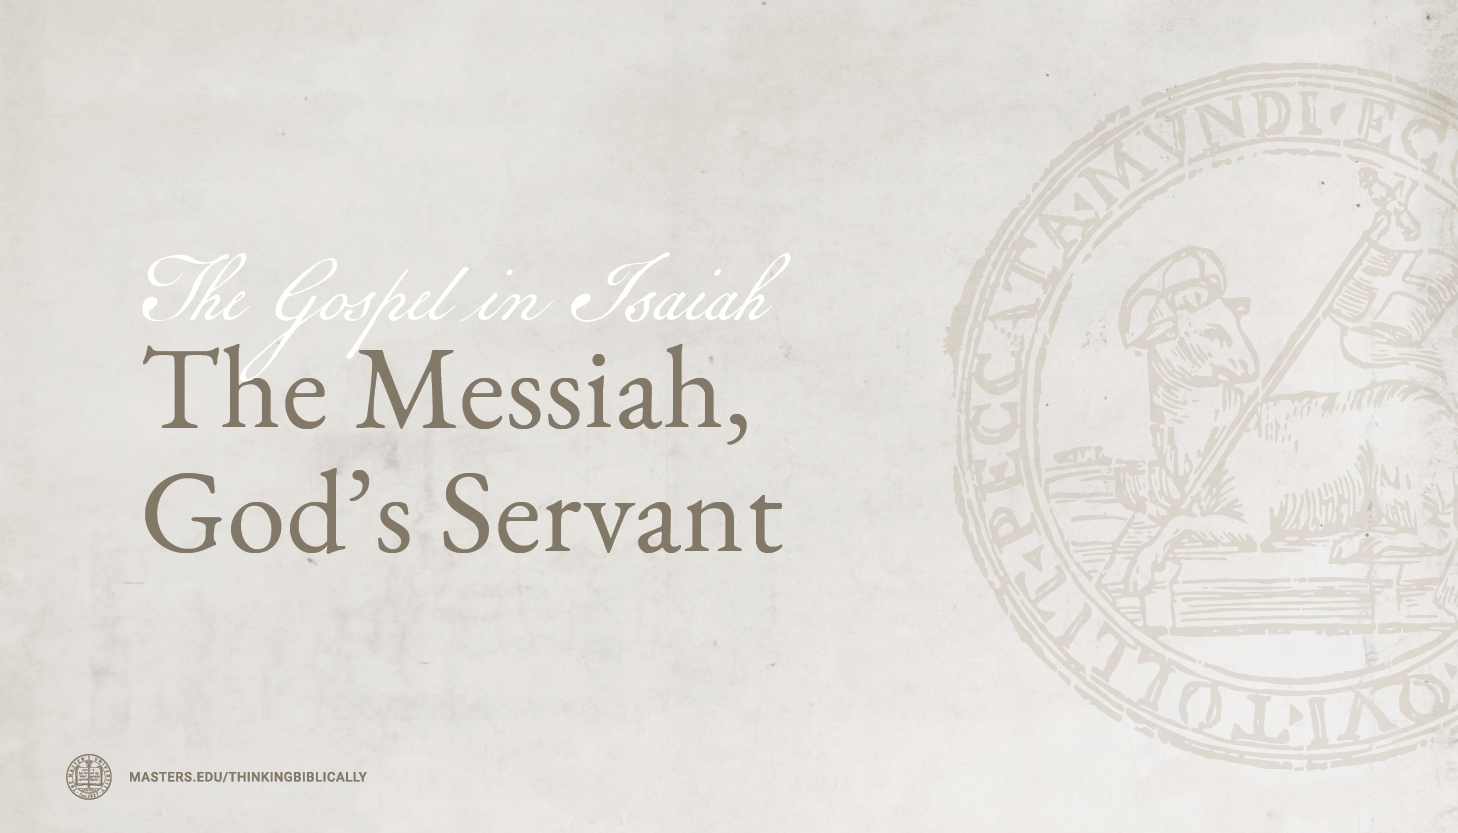 The Messiah, God’s Servant